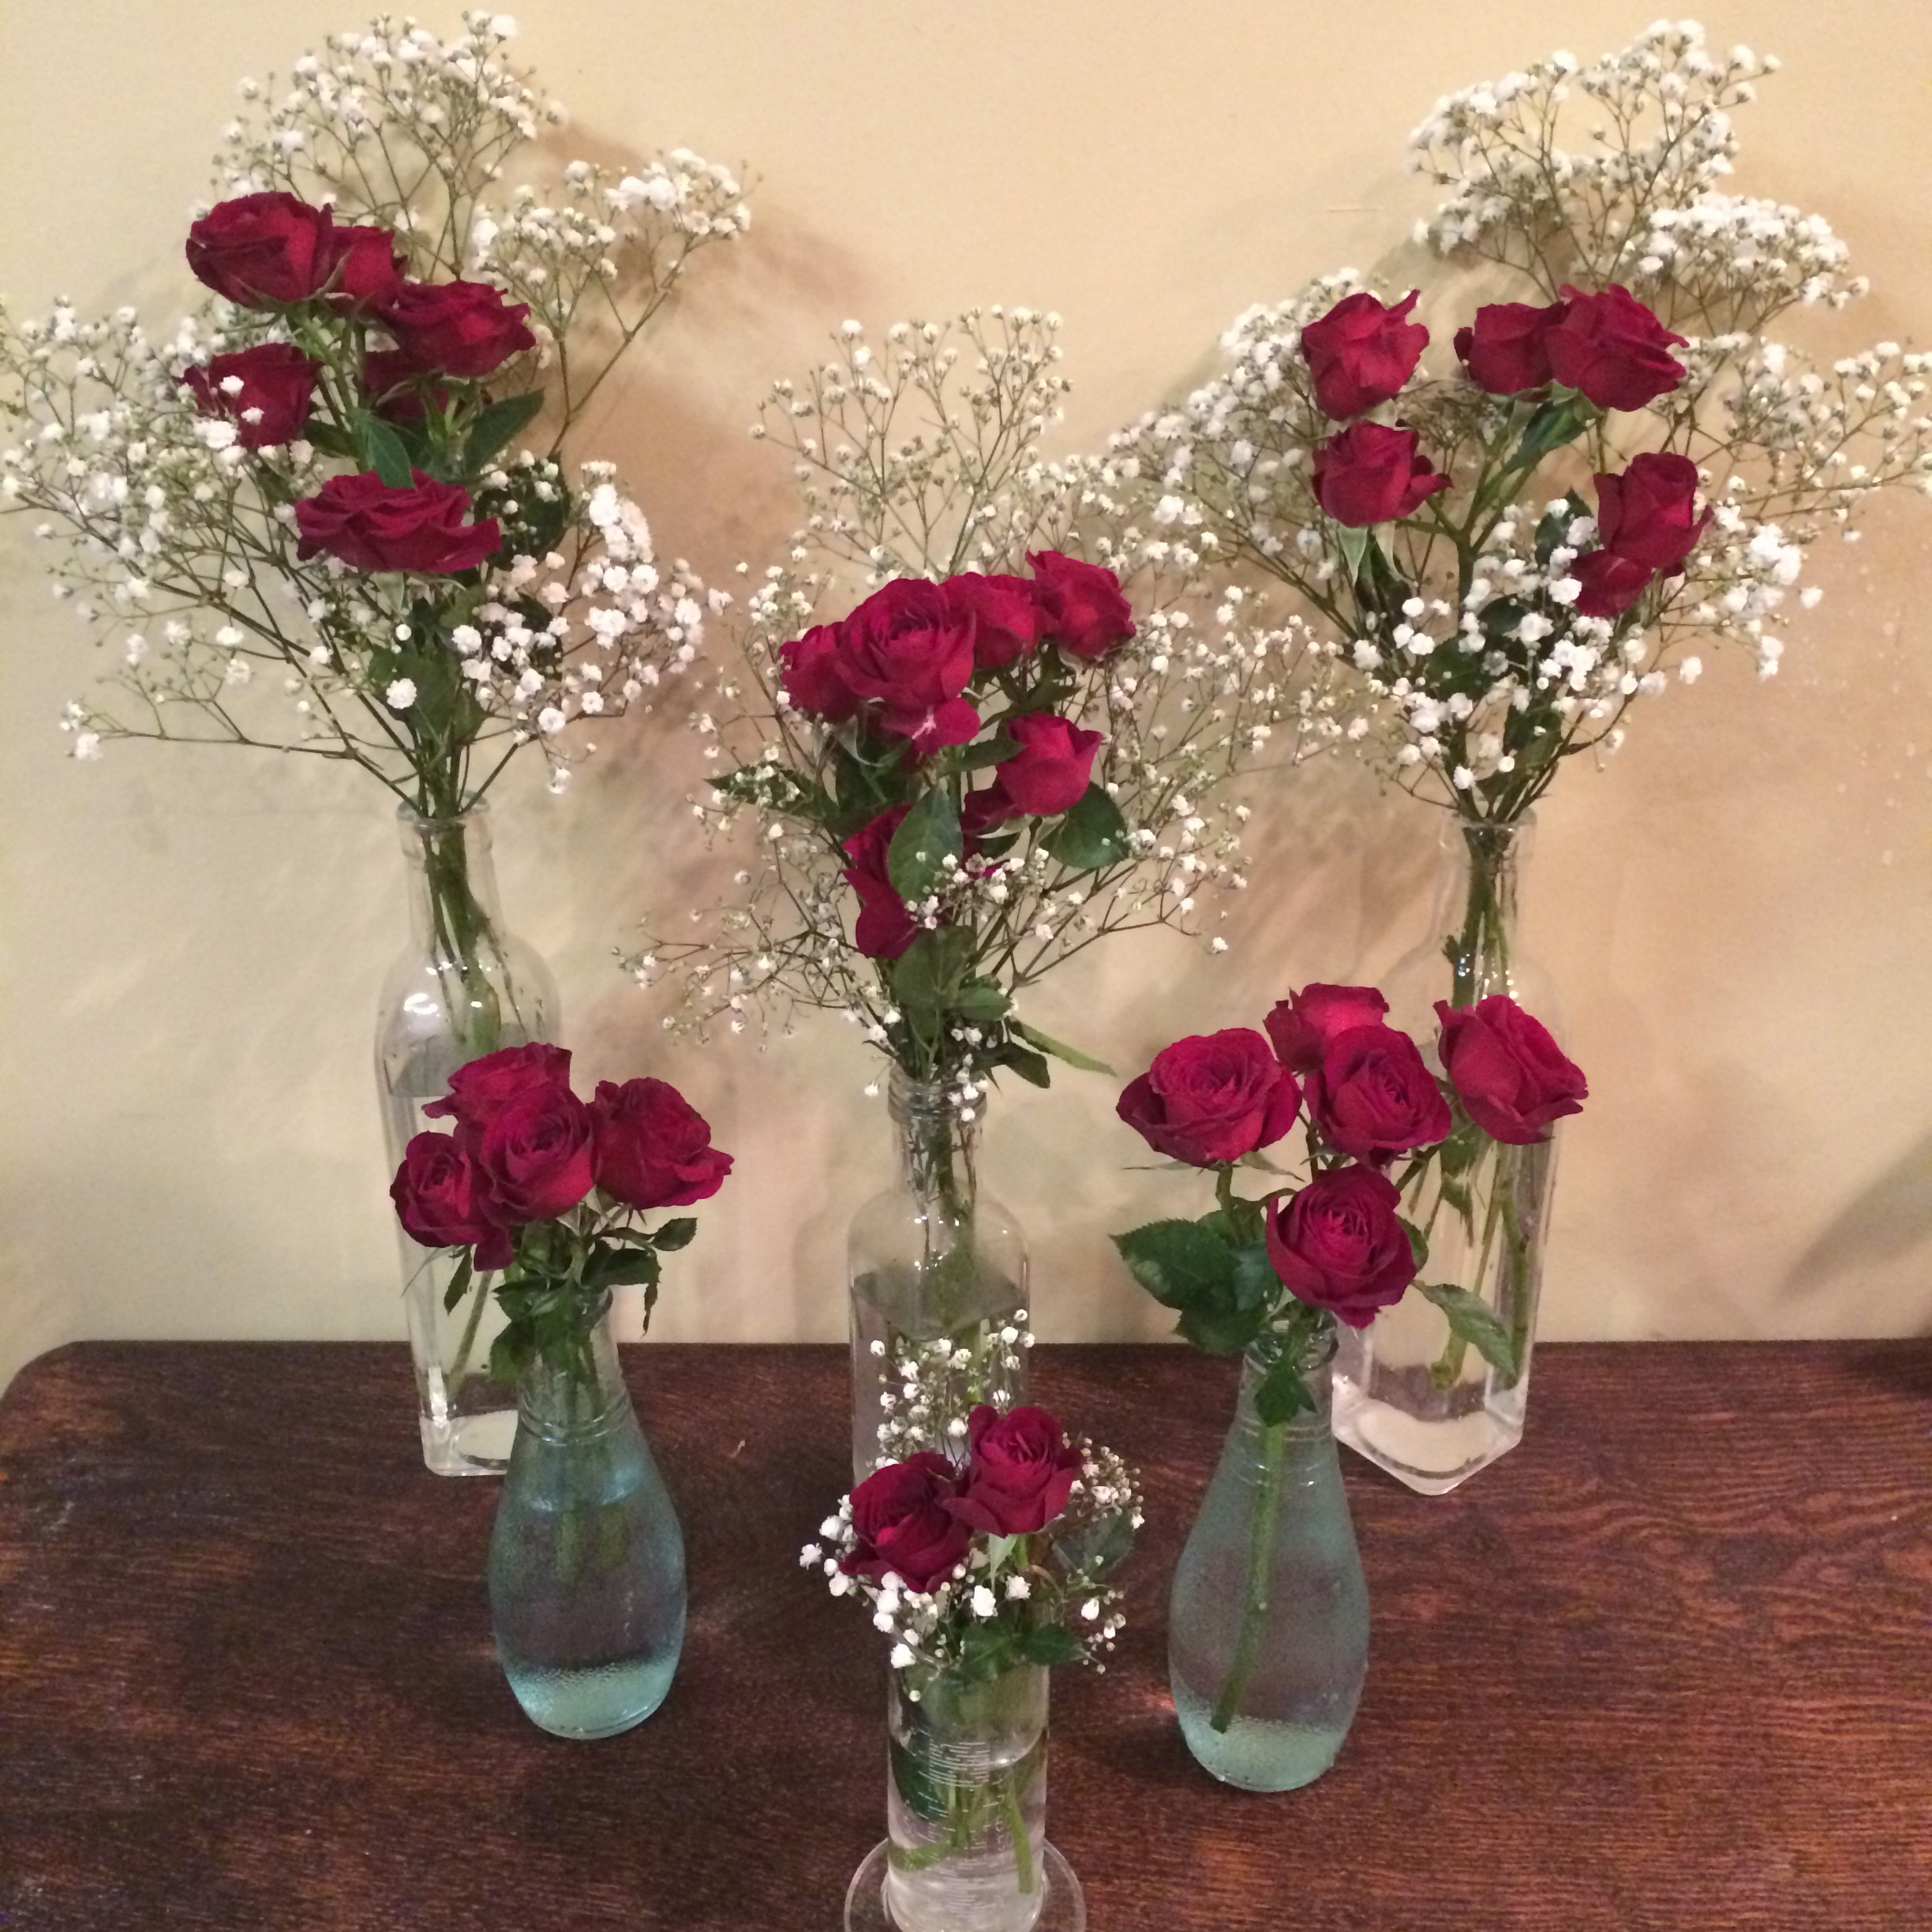 Best ideas about Flower Arrangements DIY
. Save or Pin DIY Winter Flower Arrangements for Under $10 Now.